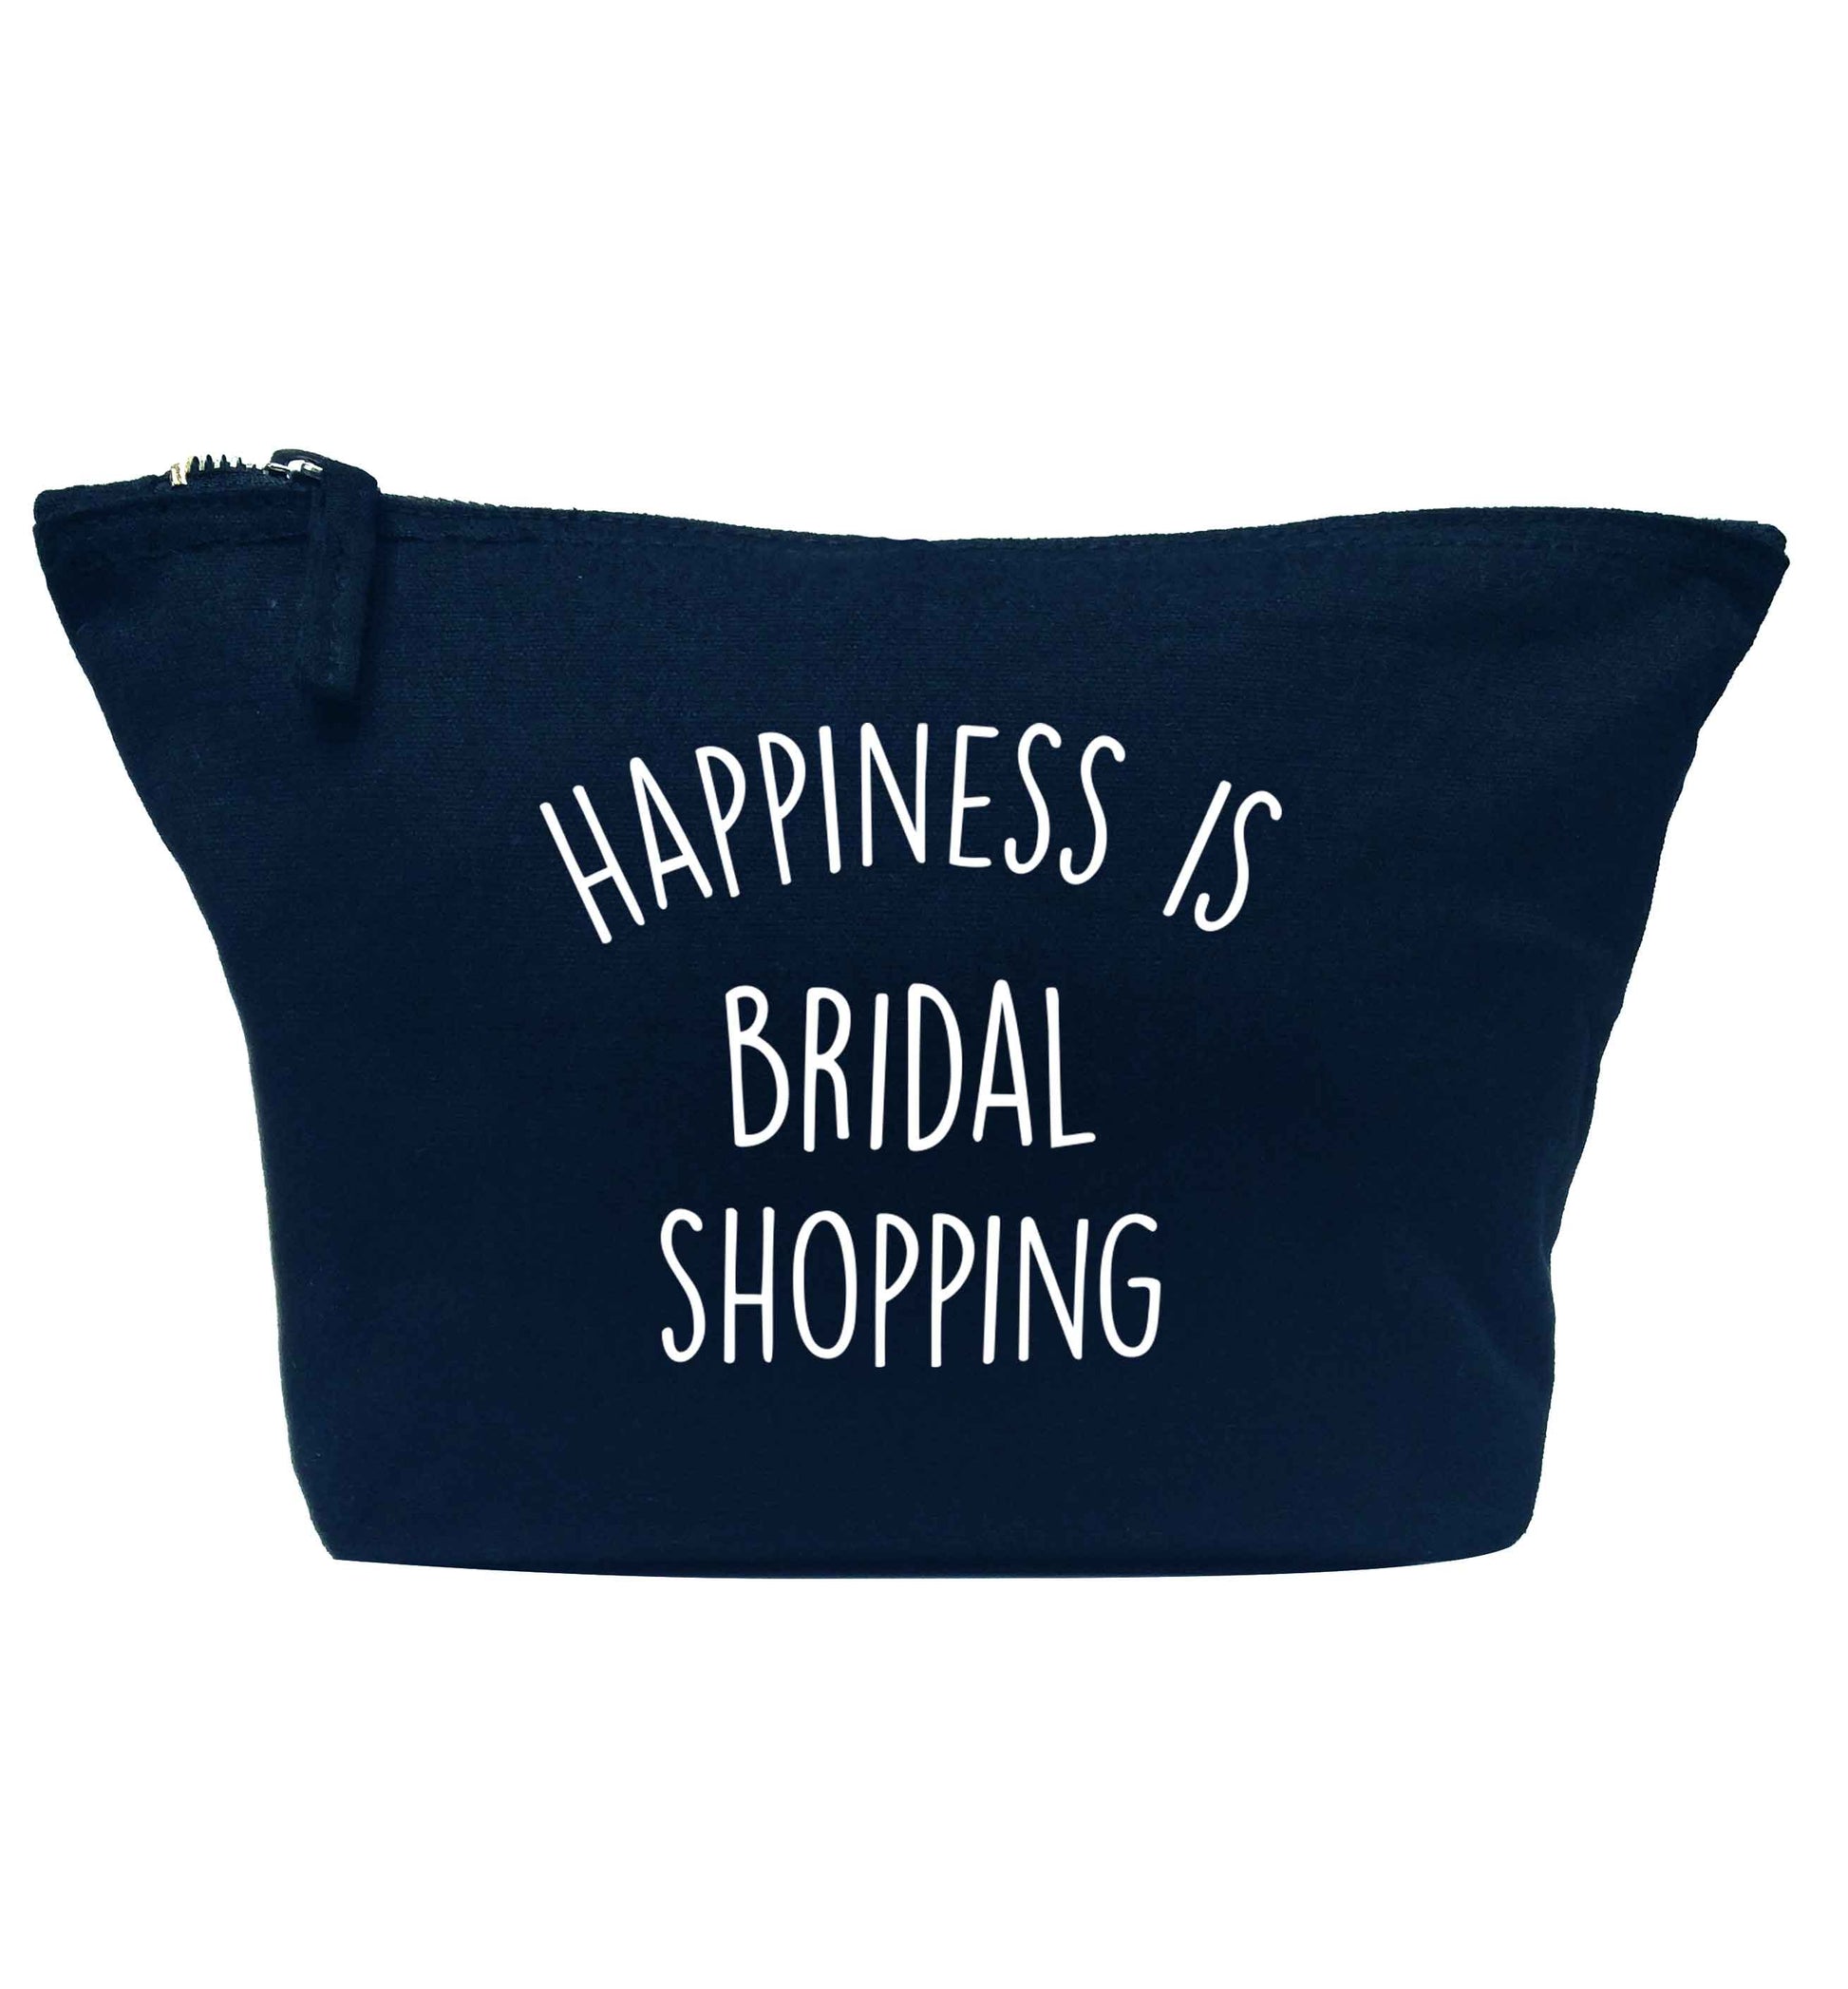 Happiness is bridal shopping navy makeup bag